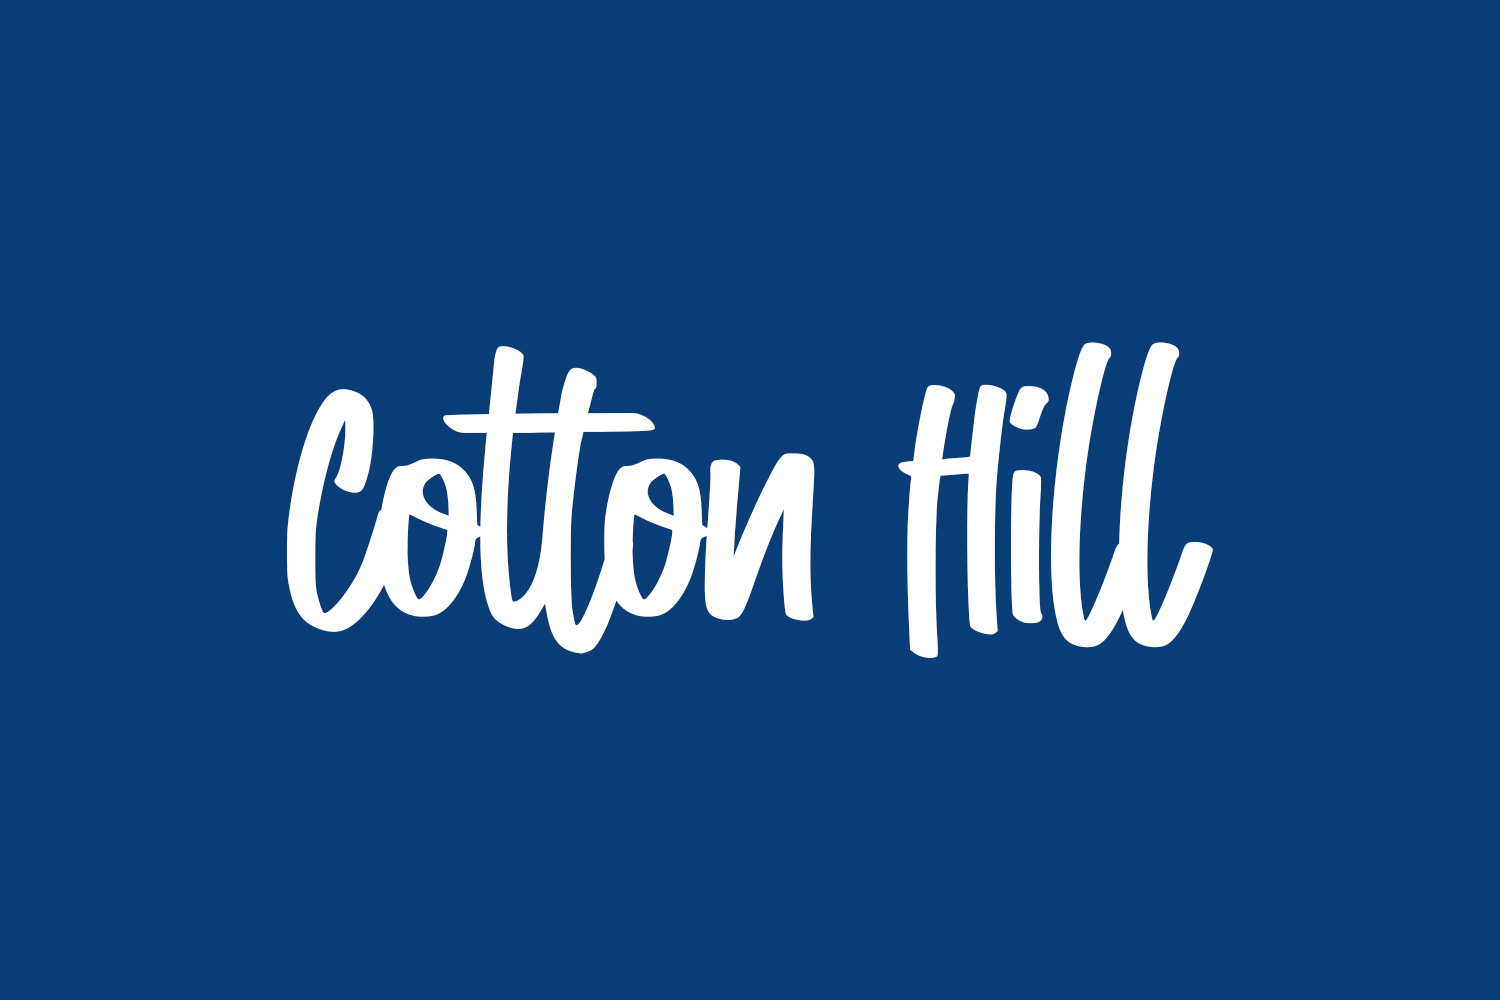 Cotton Hill